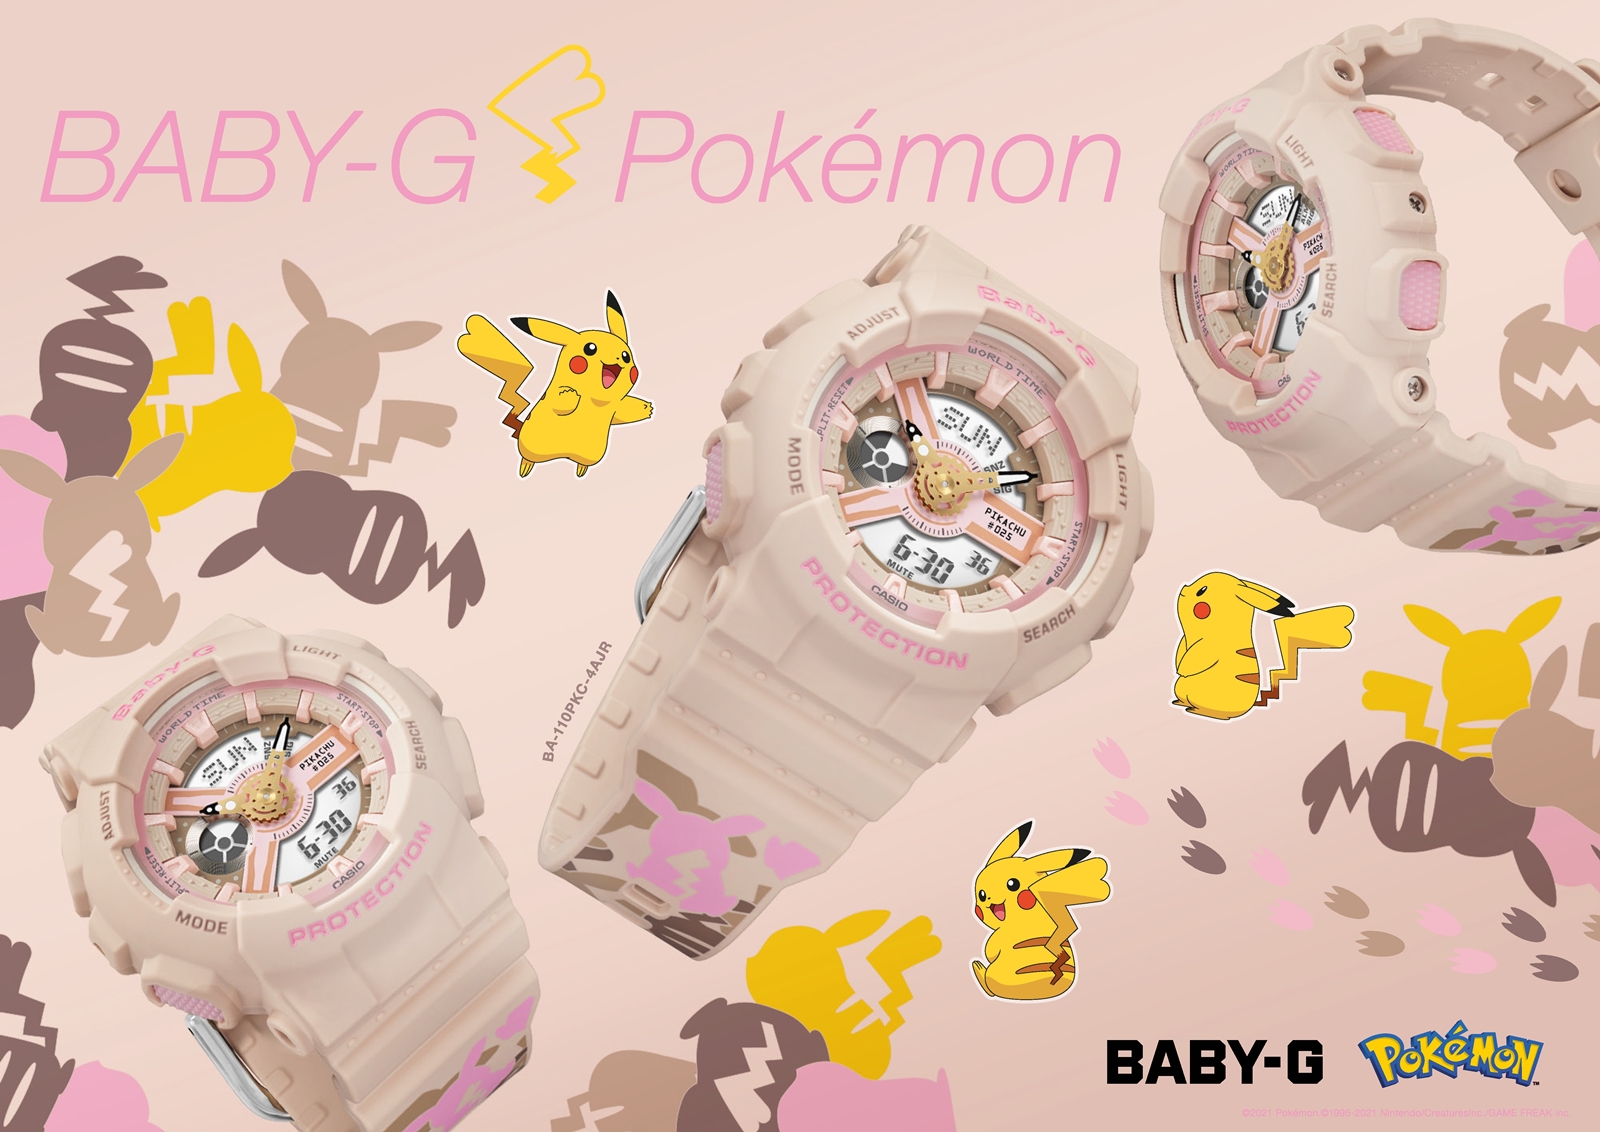 BABY-G & Pokémonコラボレーションモデル第2弾 ピカチュウ